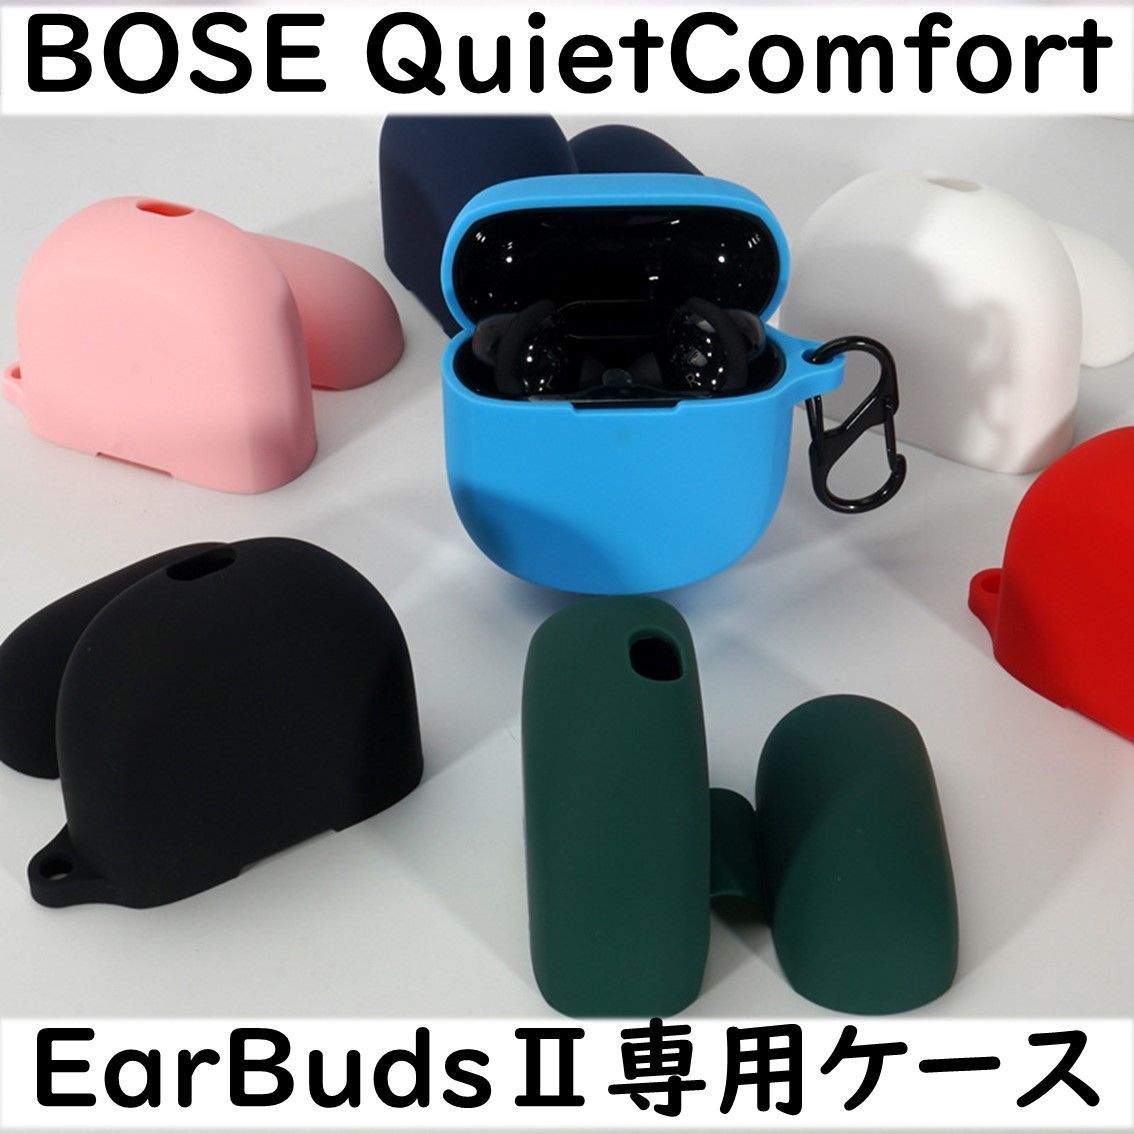 BOSE QuietComfort EarBudsⅡ ケース - Lin-T@プロフご確認ください